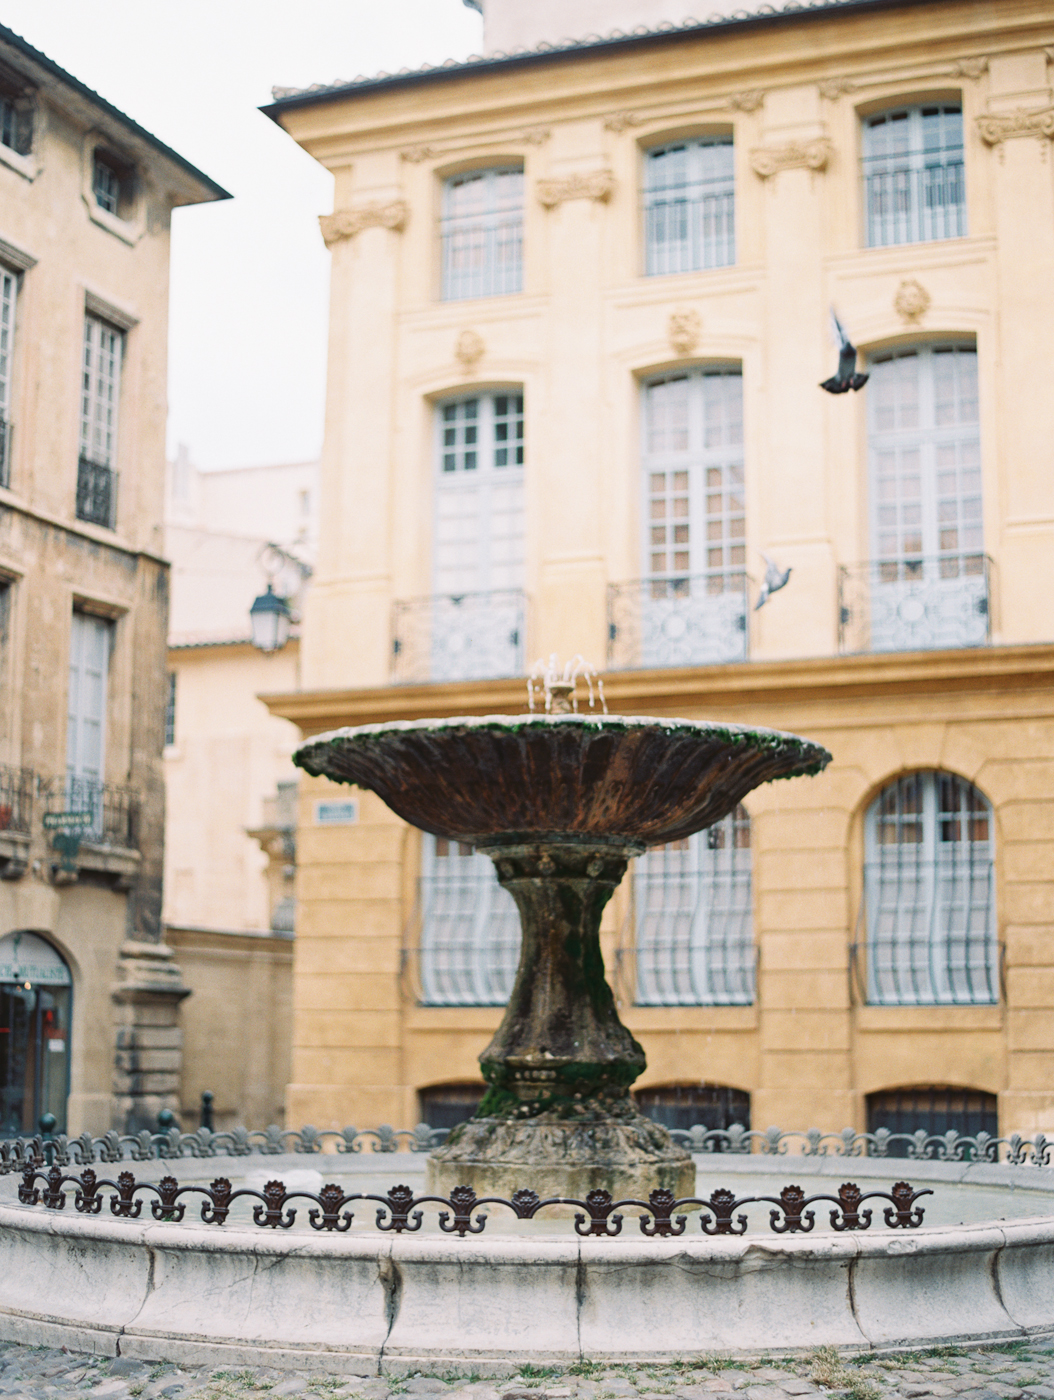 City Fountain in Aix en Provence